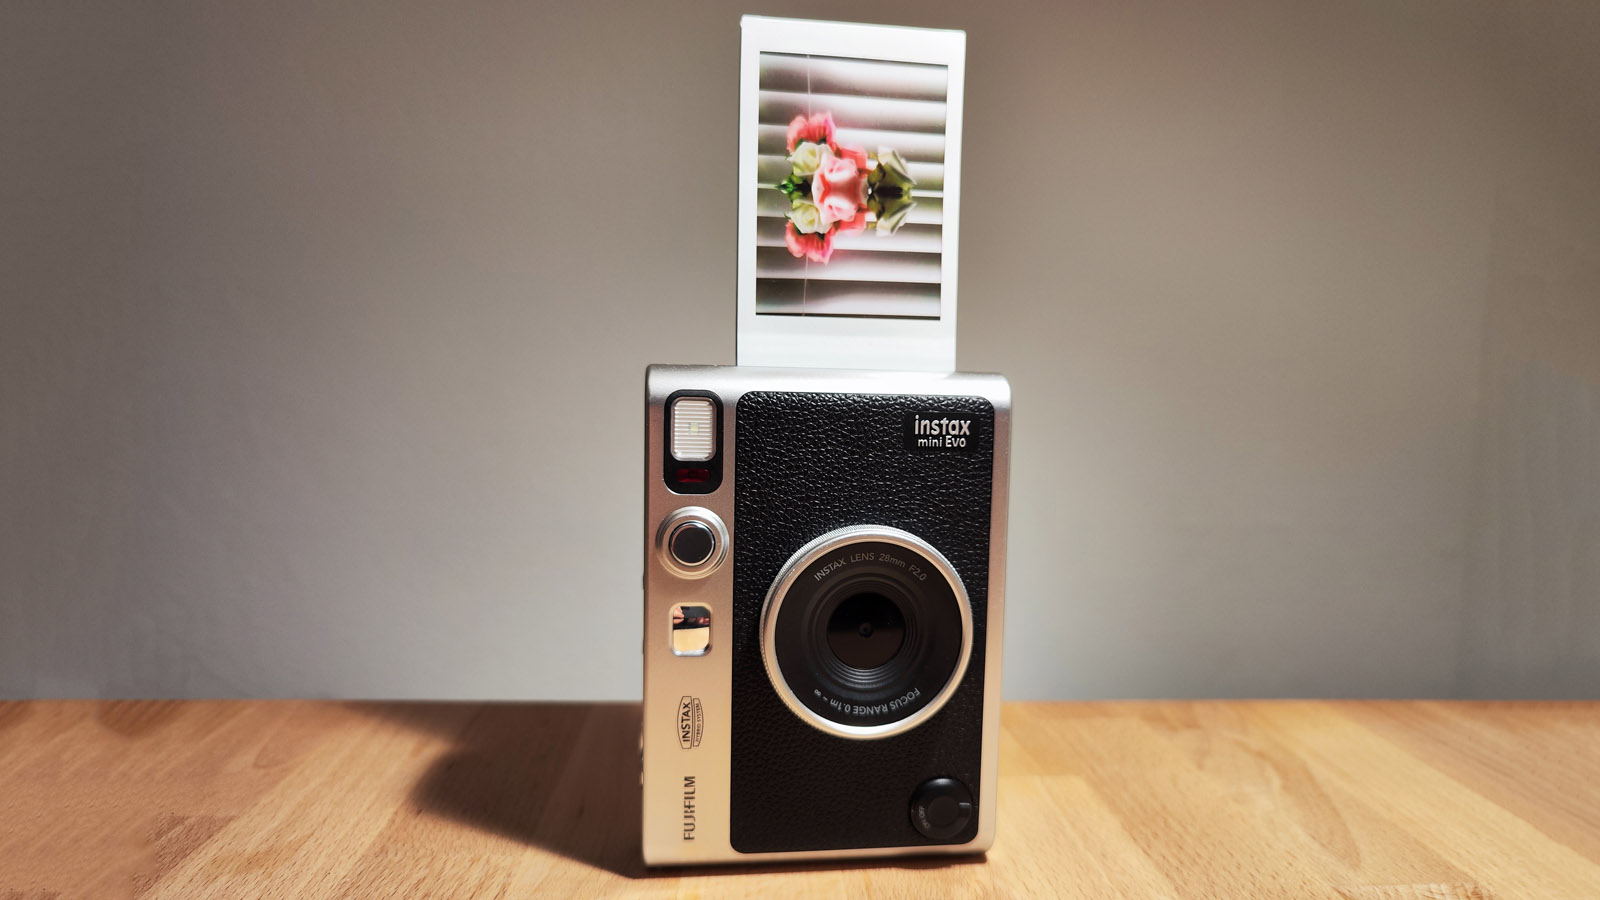 Fujifilm Instax Mini Evo Camera Review - Casual Photophile